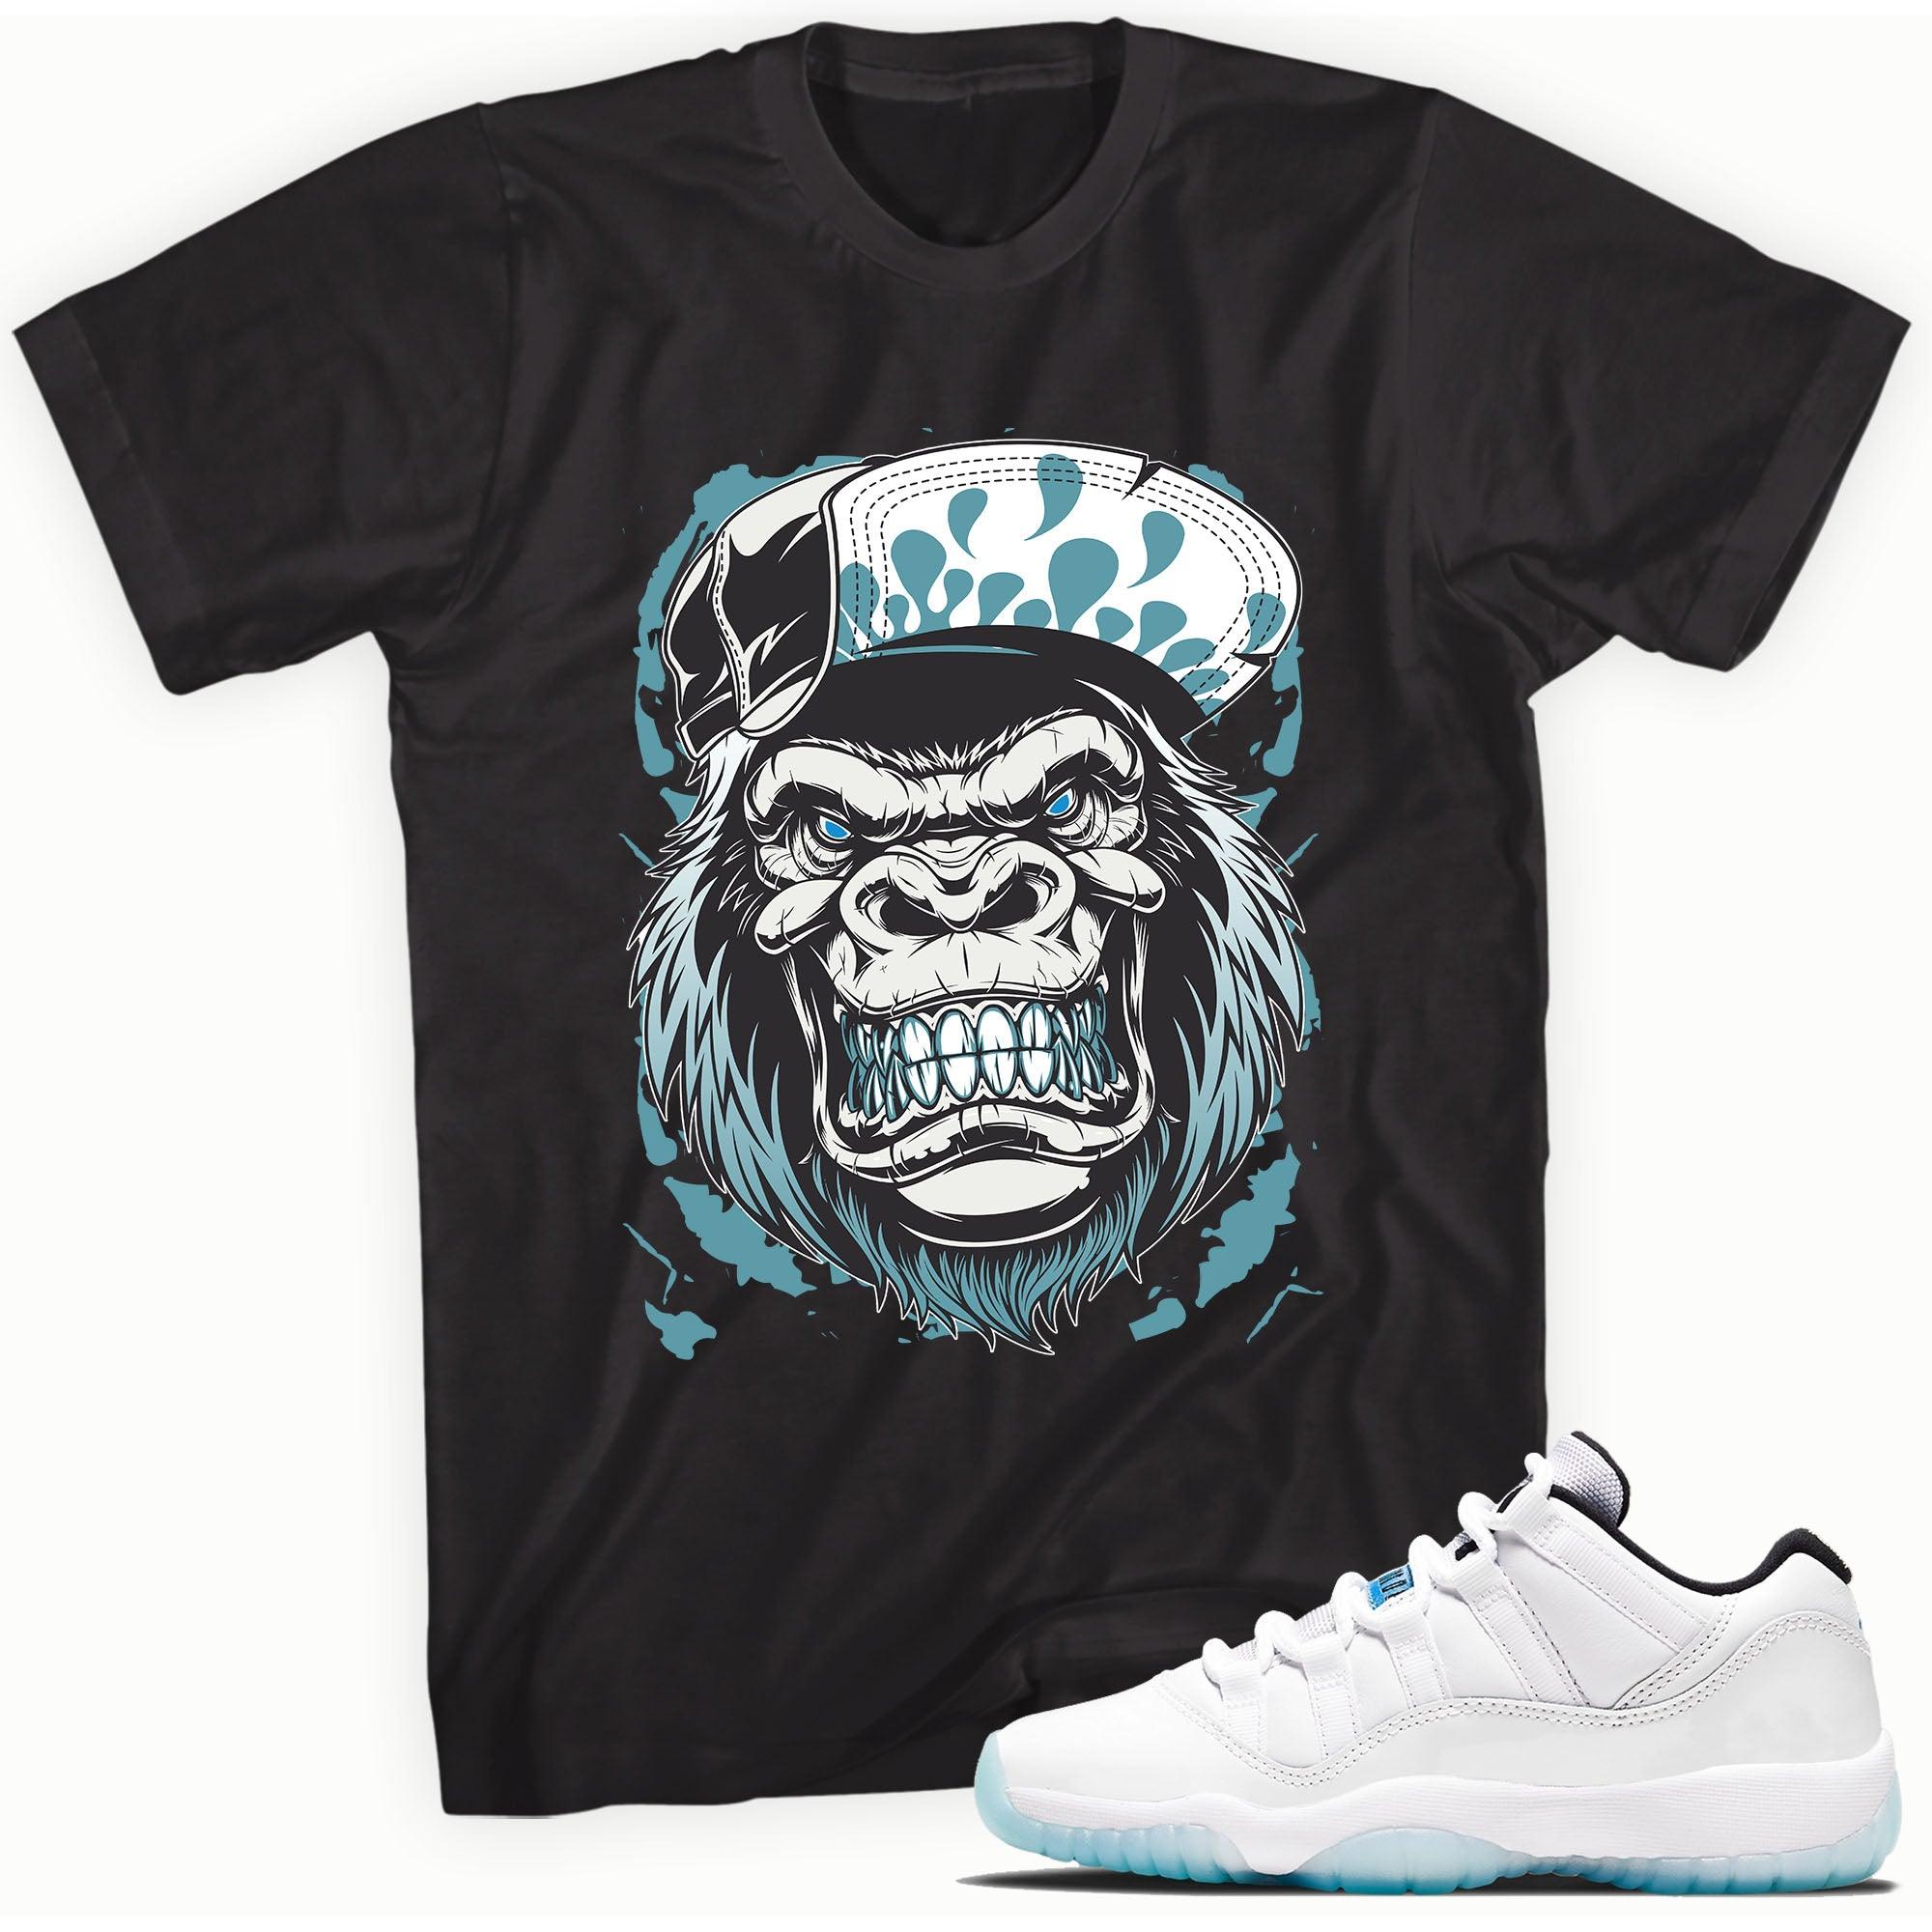 Black Gorilla Beast Shirt AJ 11s Retro Low Legend Blue photo